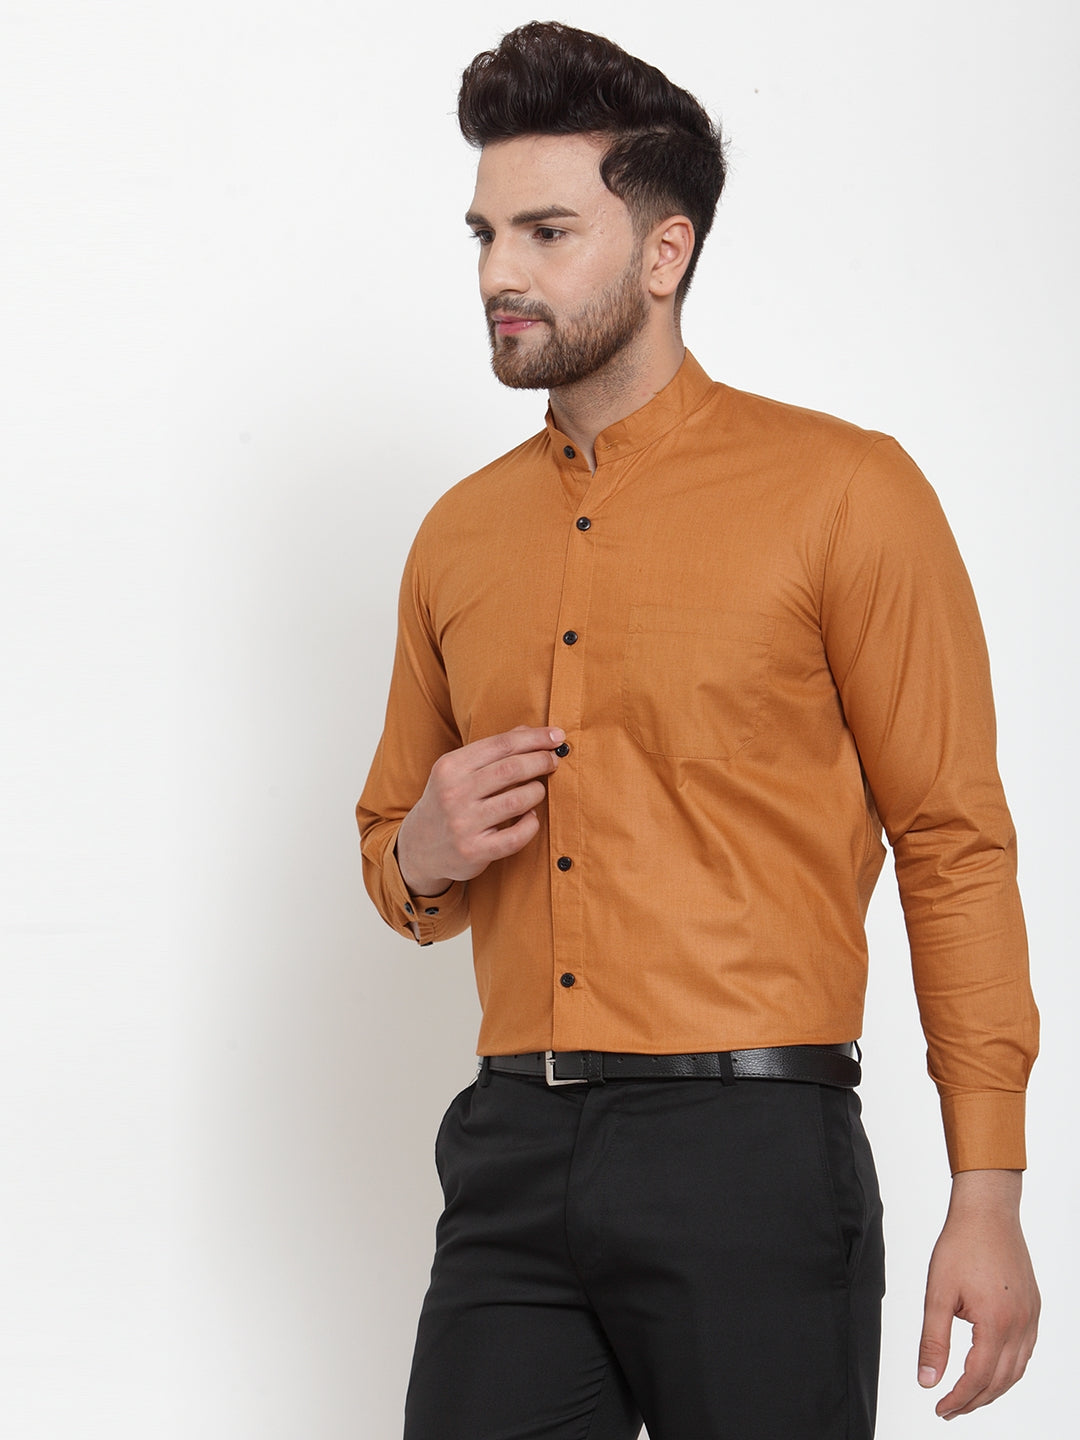 Men's Rust Cotton Solid Mandarin Collar Formal Shirts ( SF 726Rust ) - Jainish